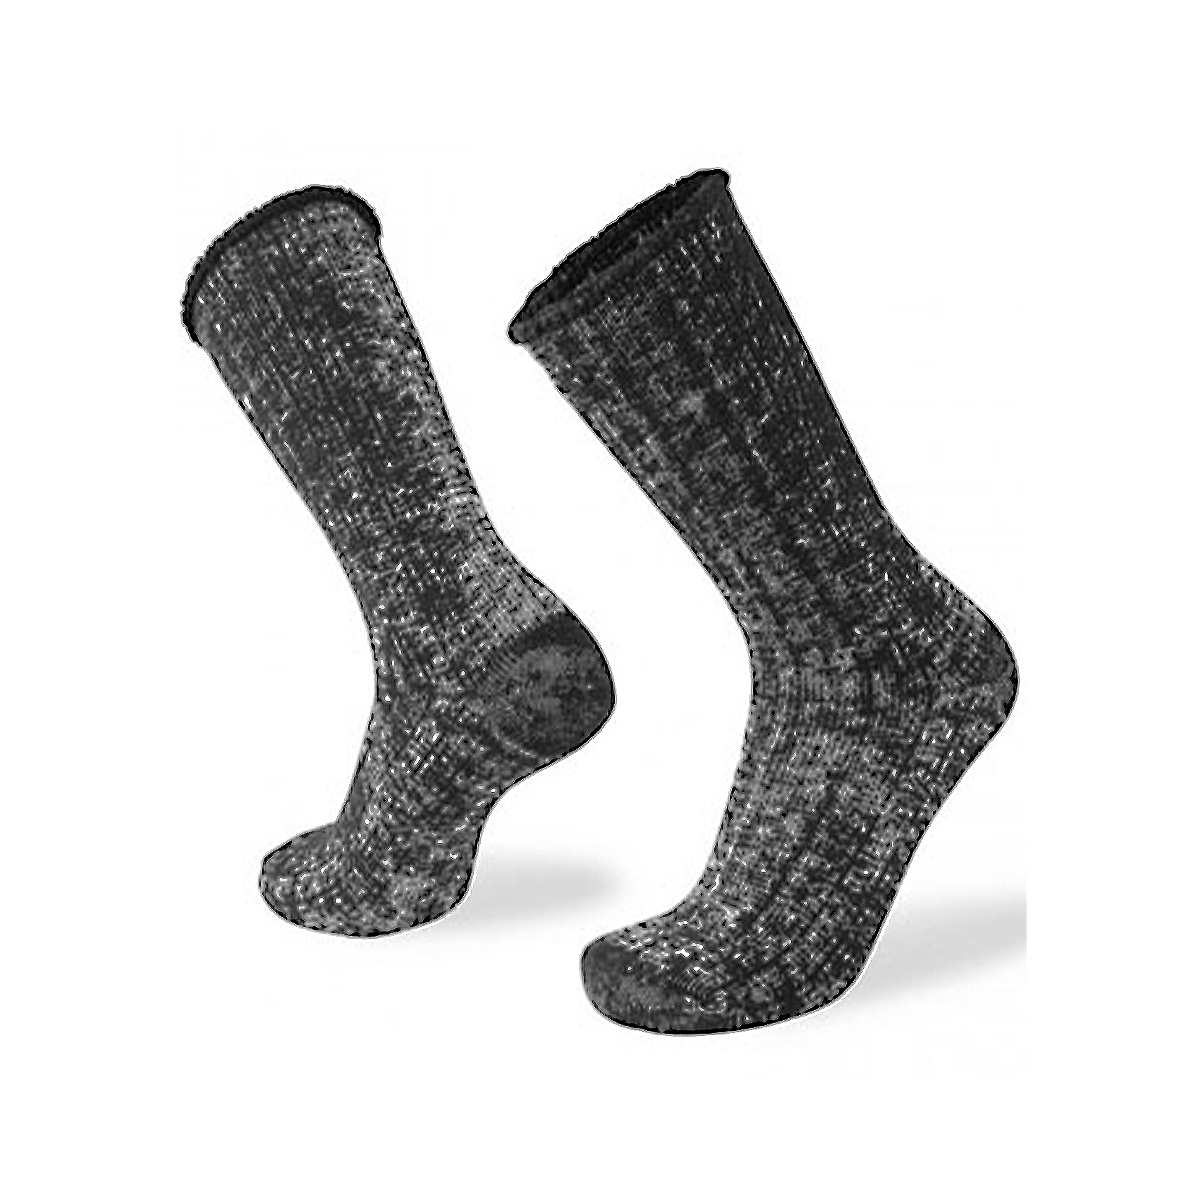 Wilderness Wear Merino Wool Sock Black/White Large S323